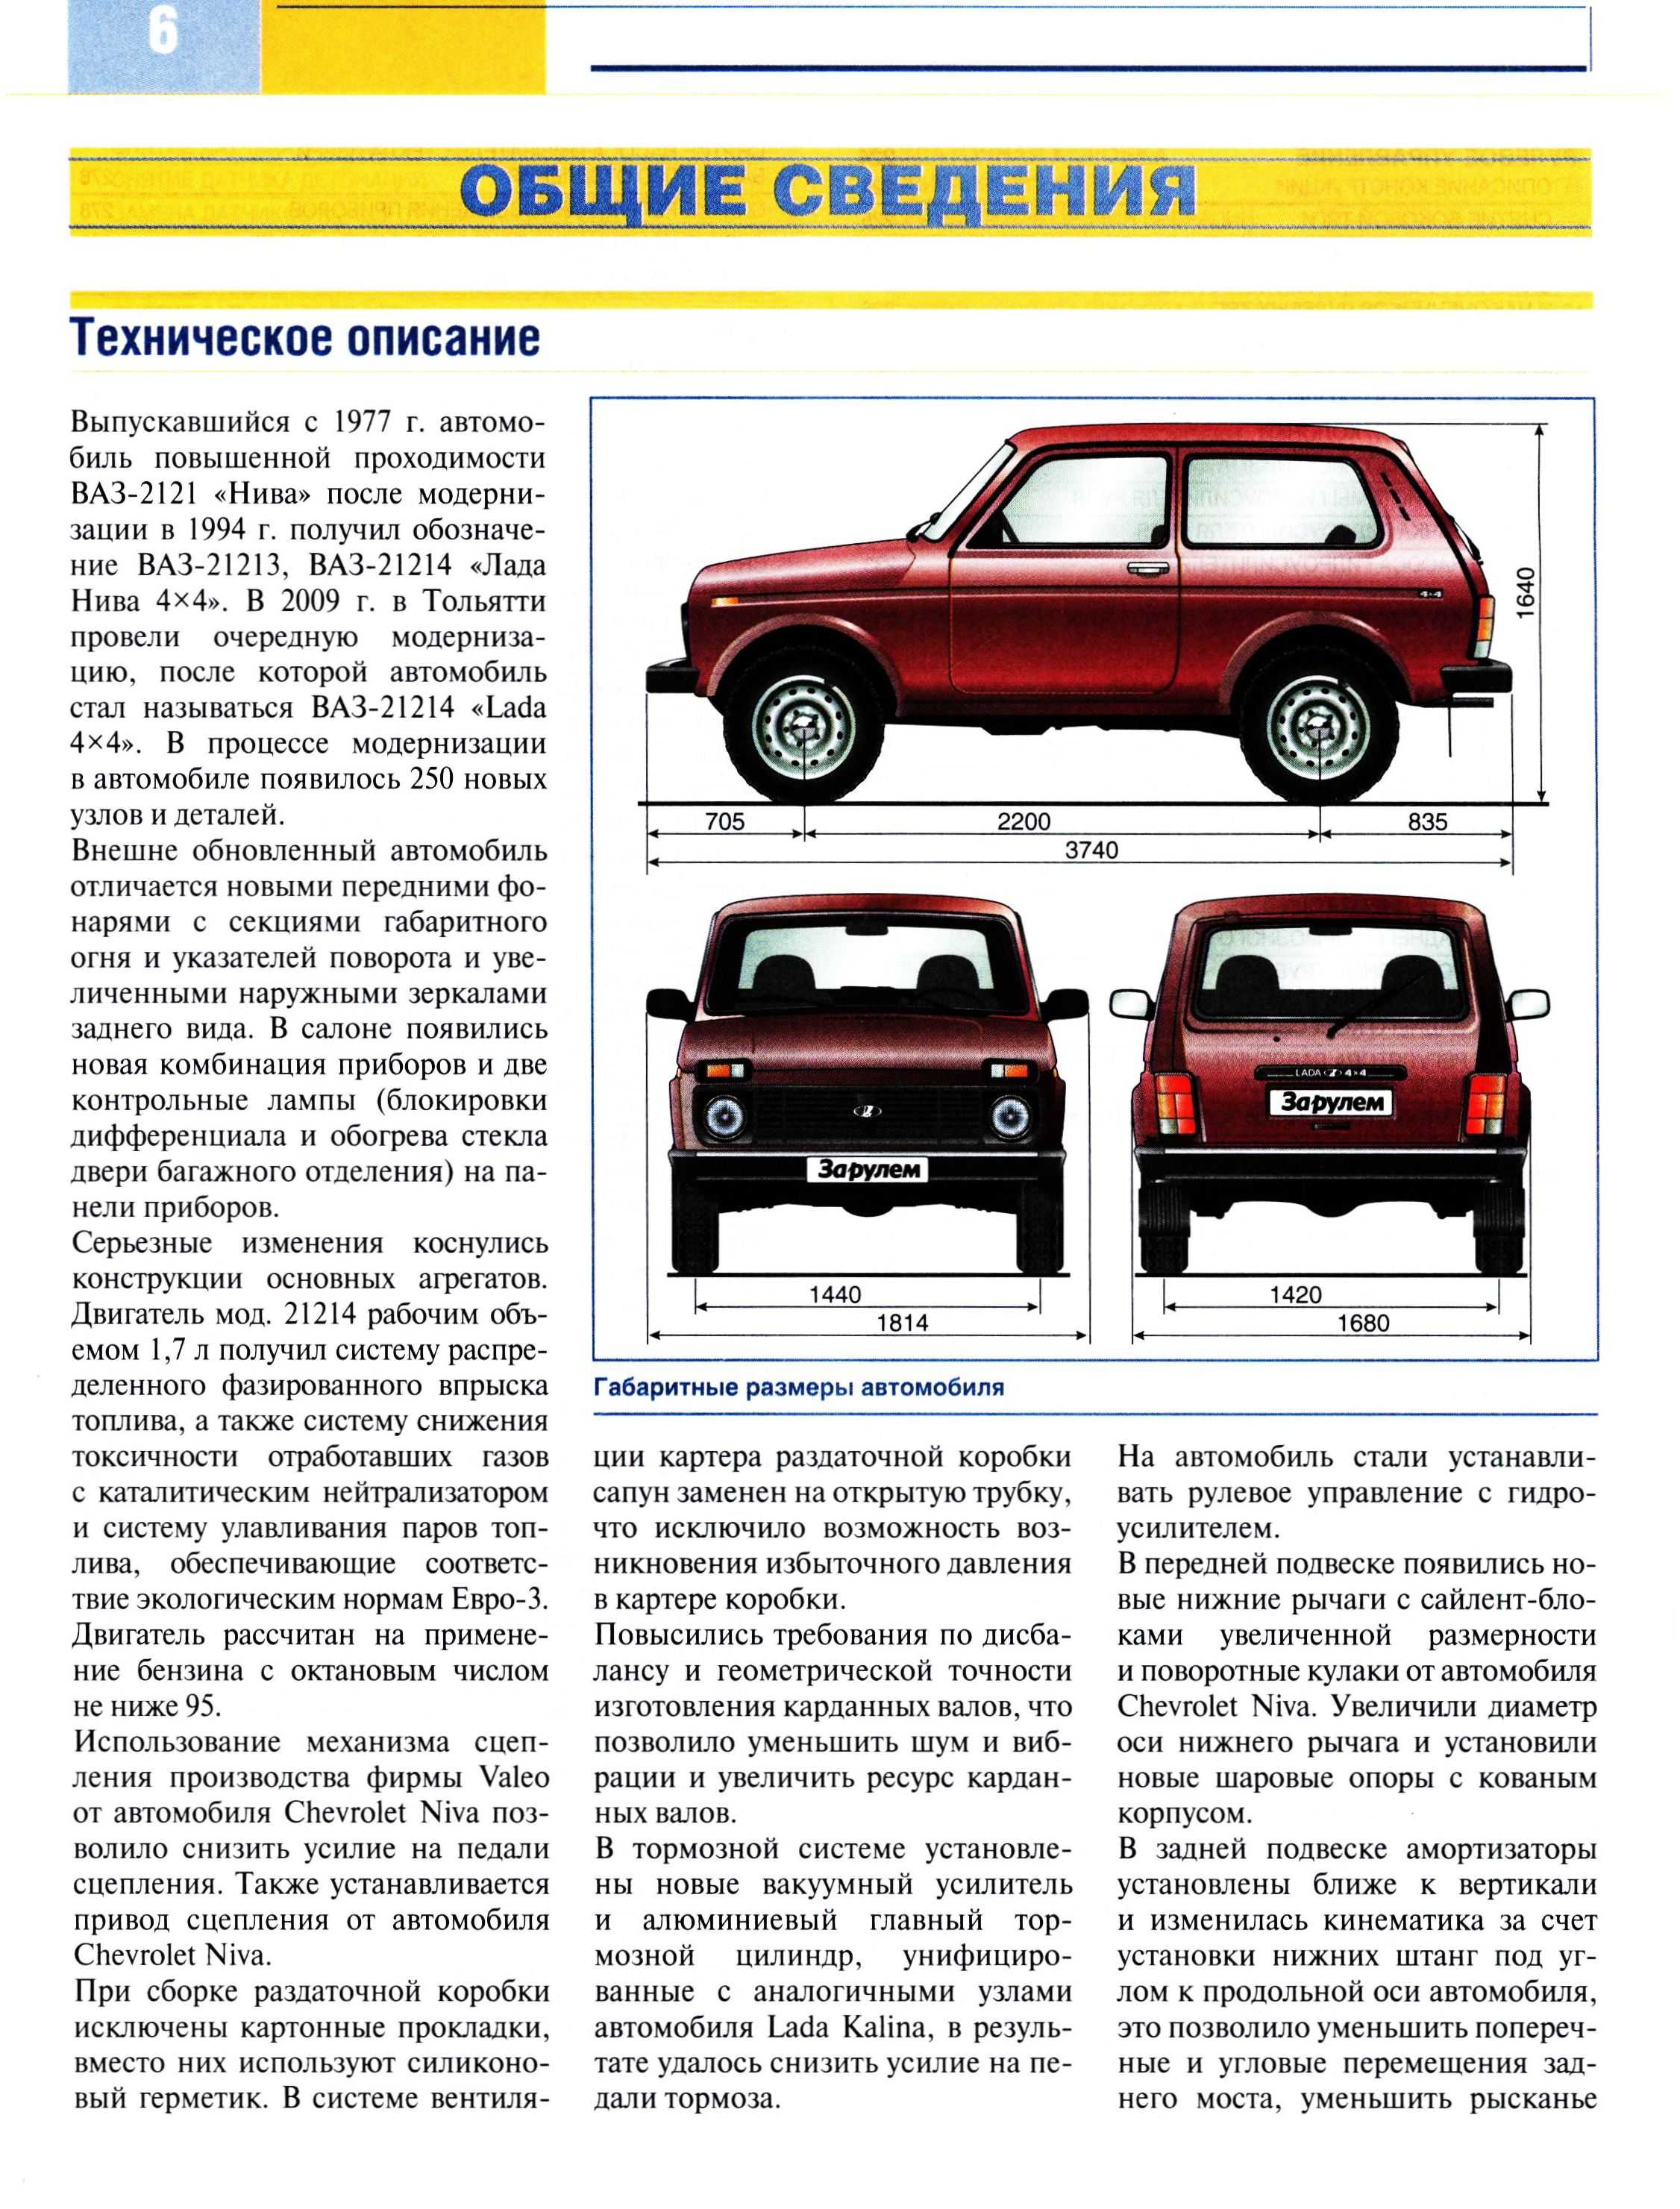 Глава 3 старение деталей - токарев а.н. техническая эксплуатация автомобилей на маршруте - 1-128.doc